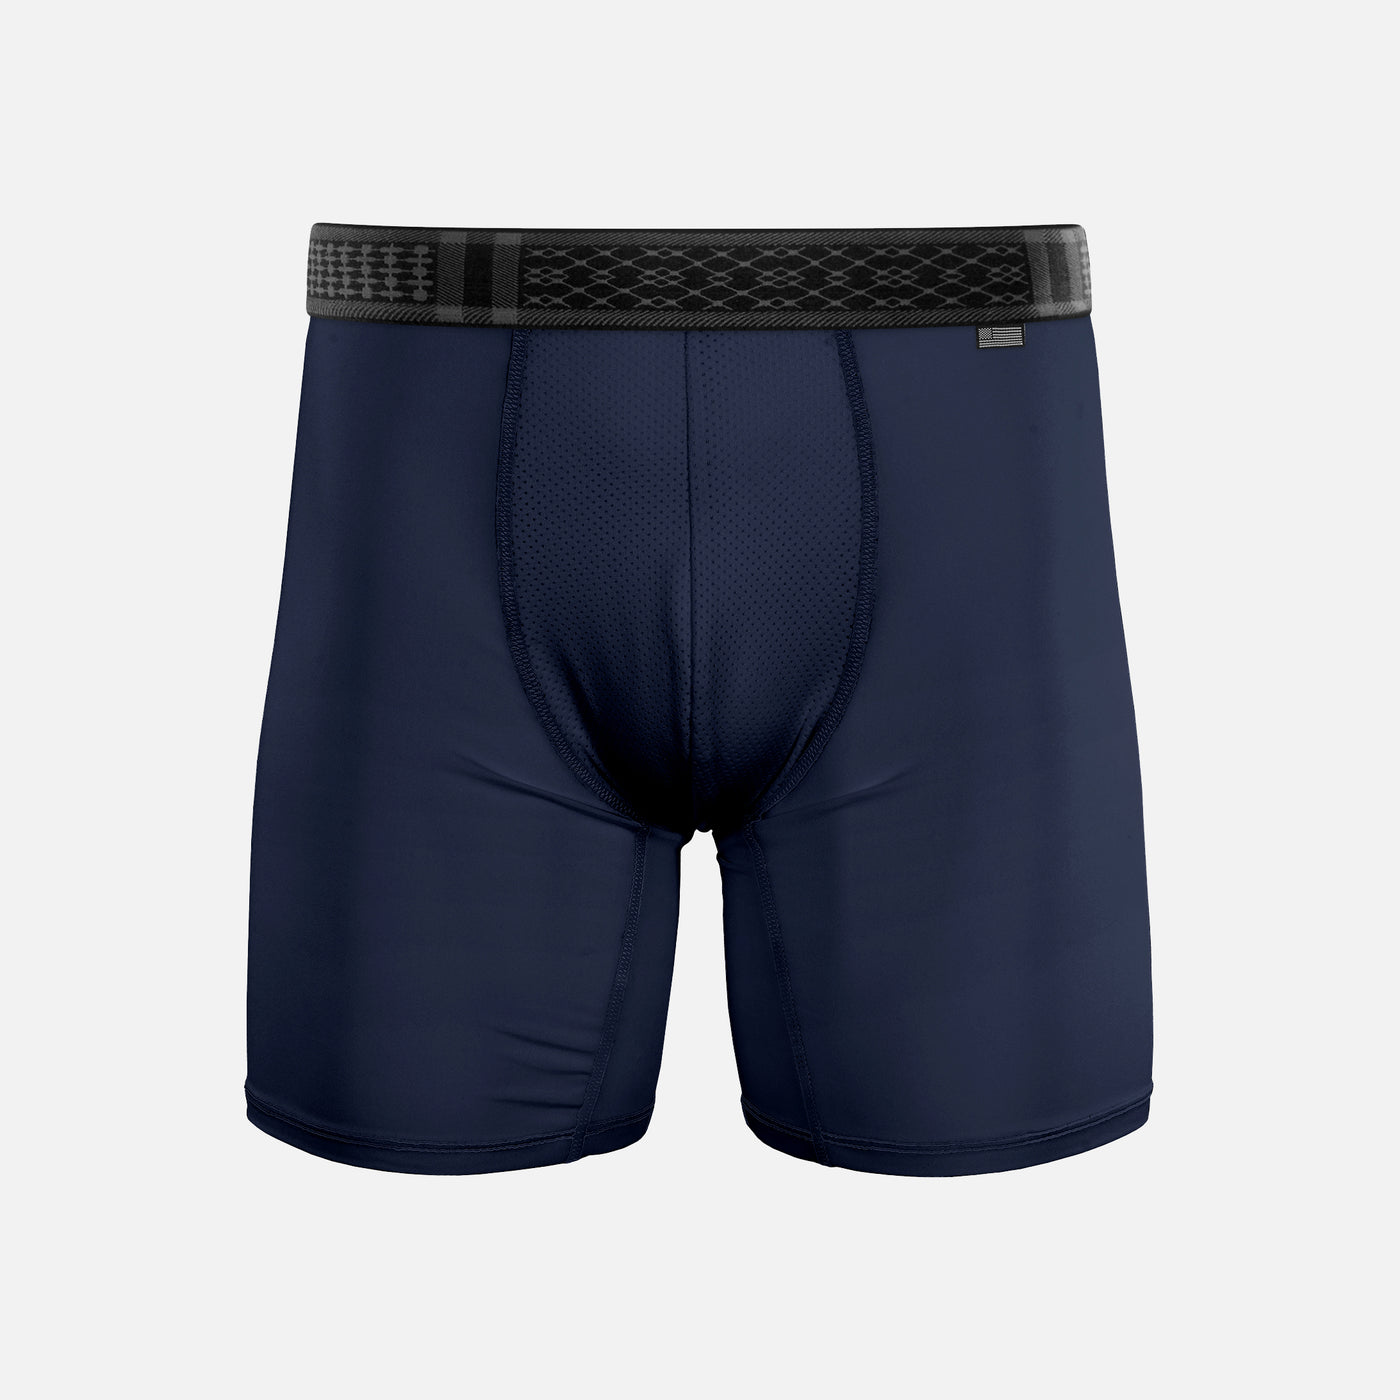 Hue Navy Men's Underwear